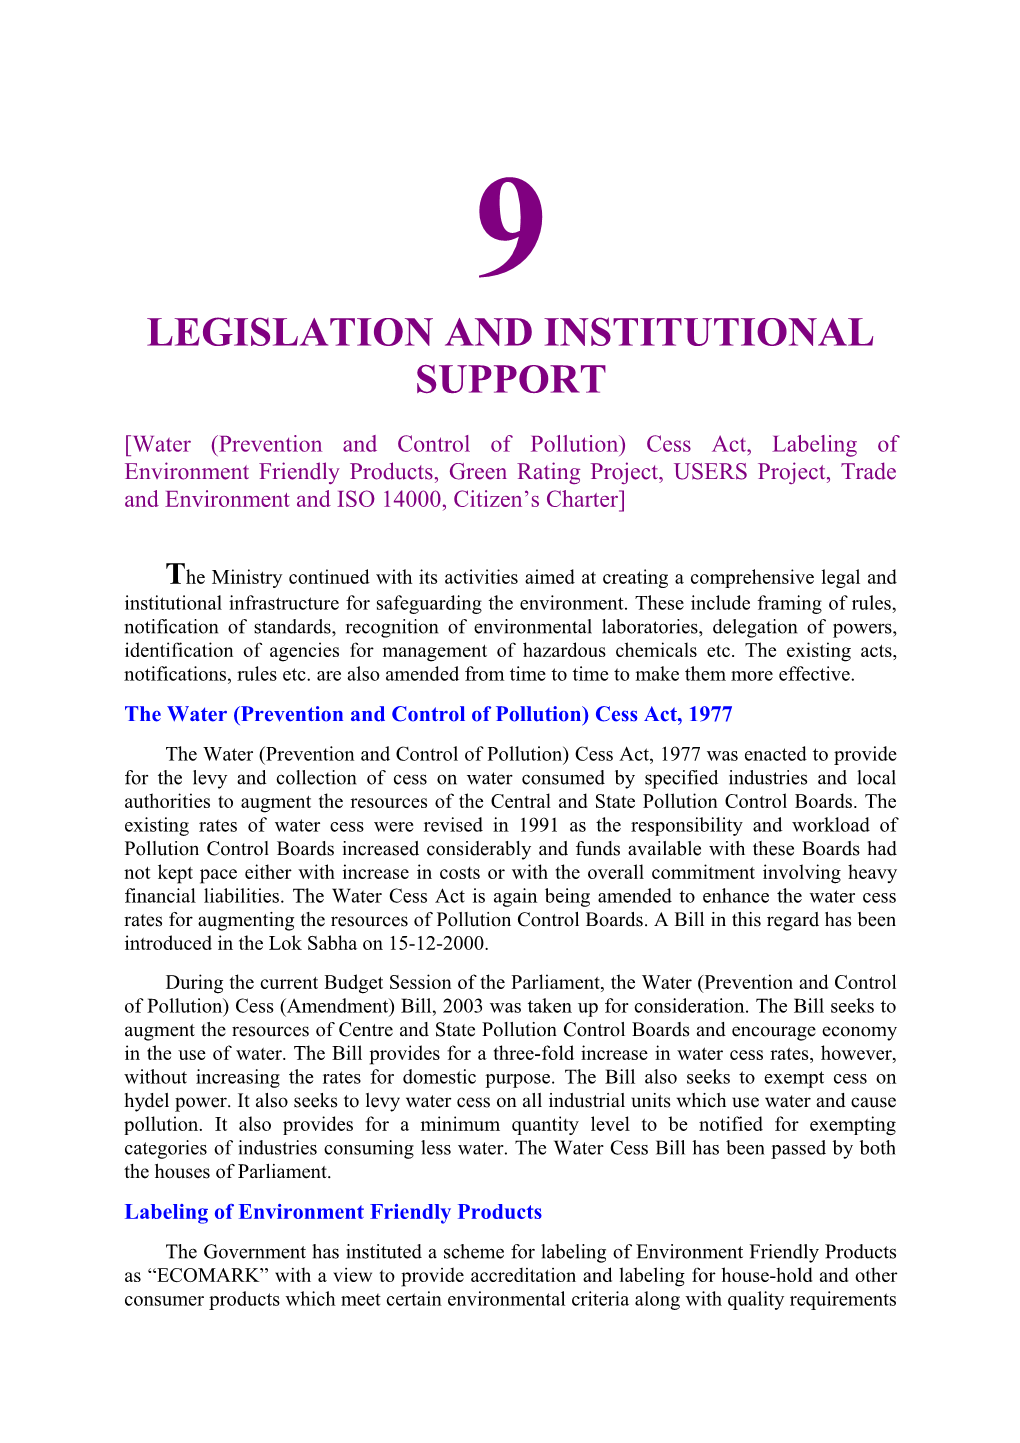 Legislation and Institutional Support